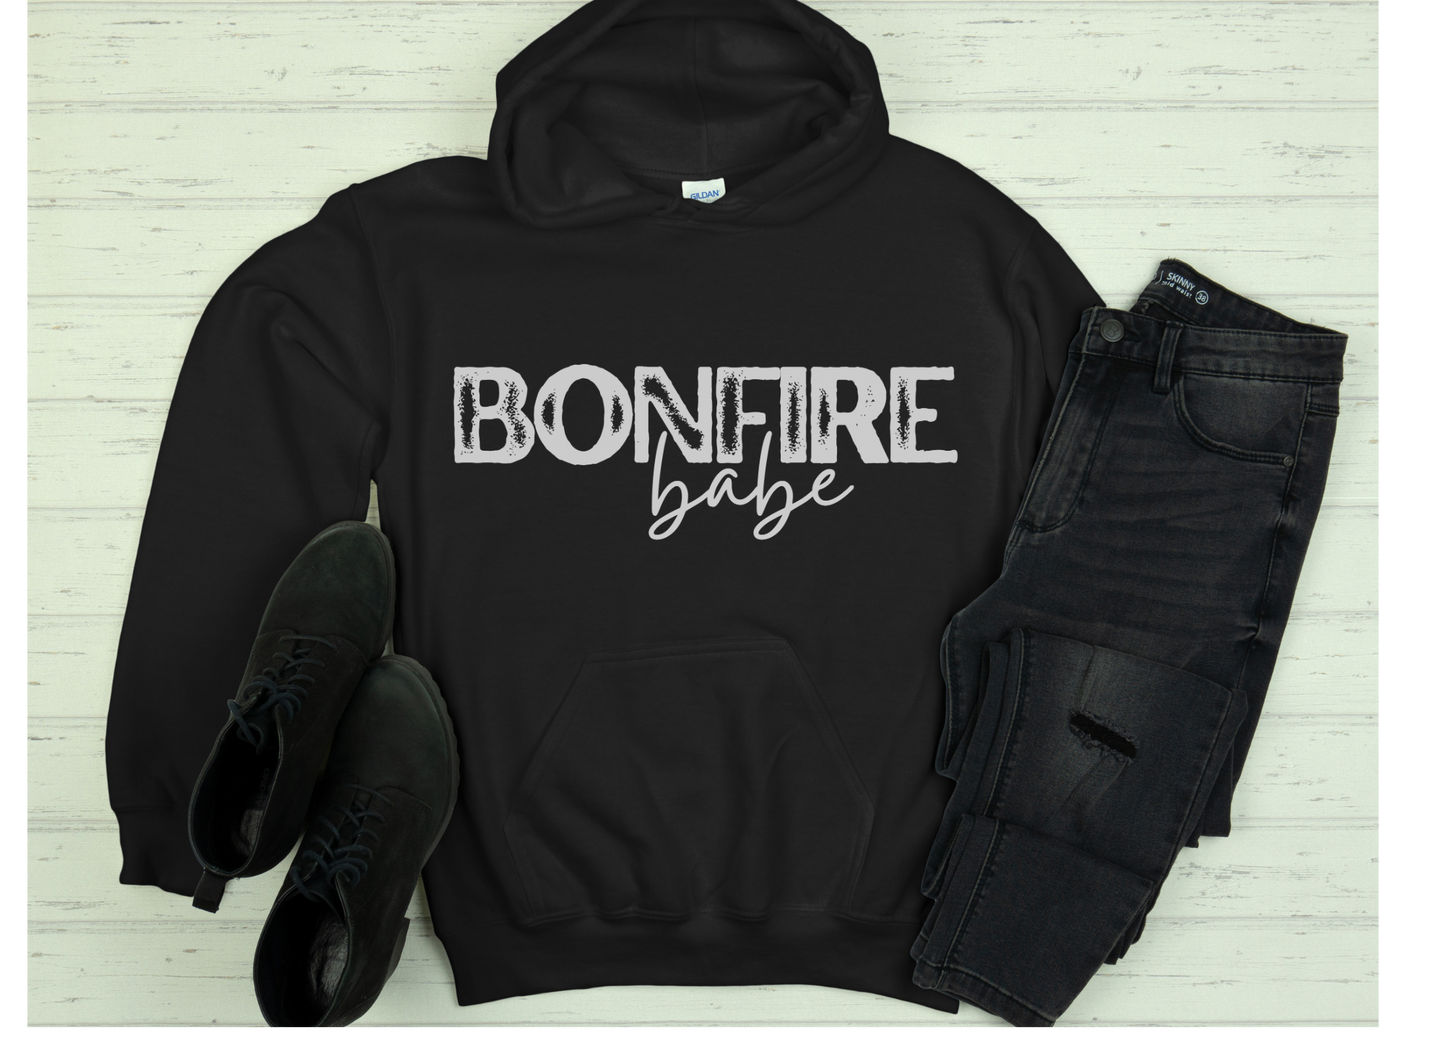 Bonfire babe